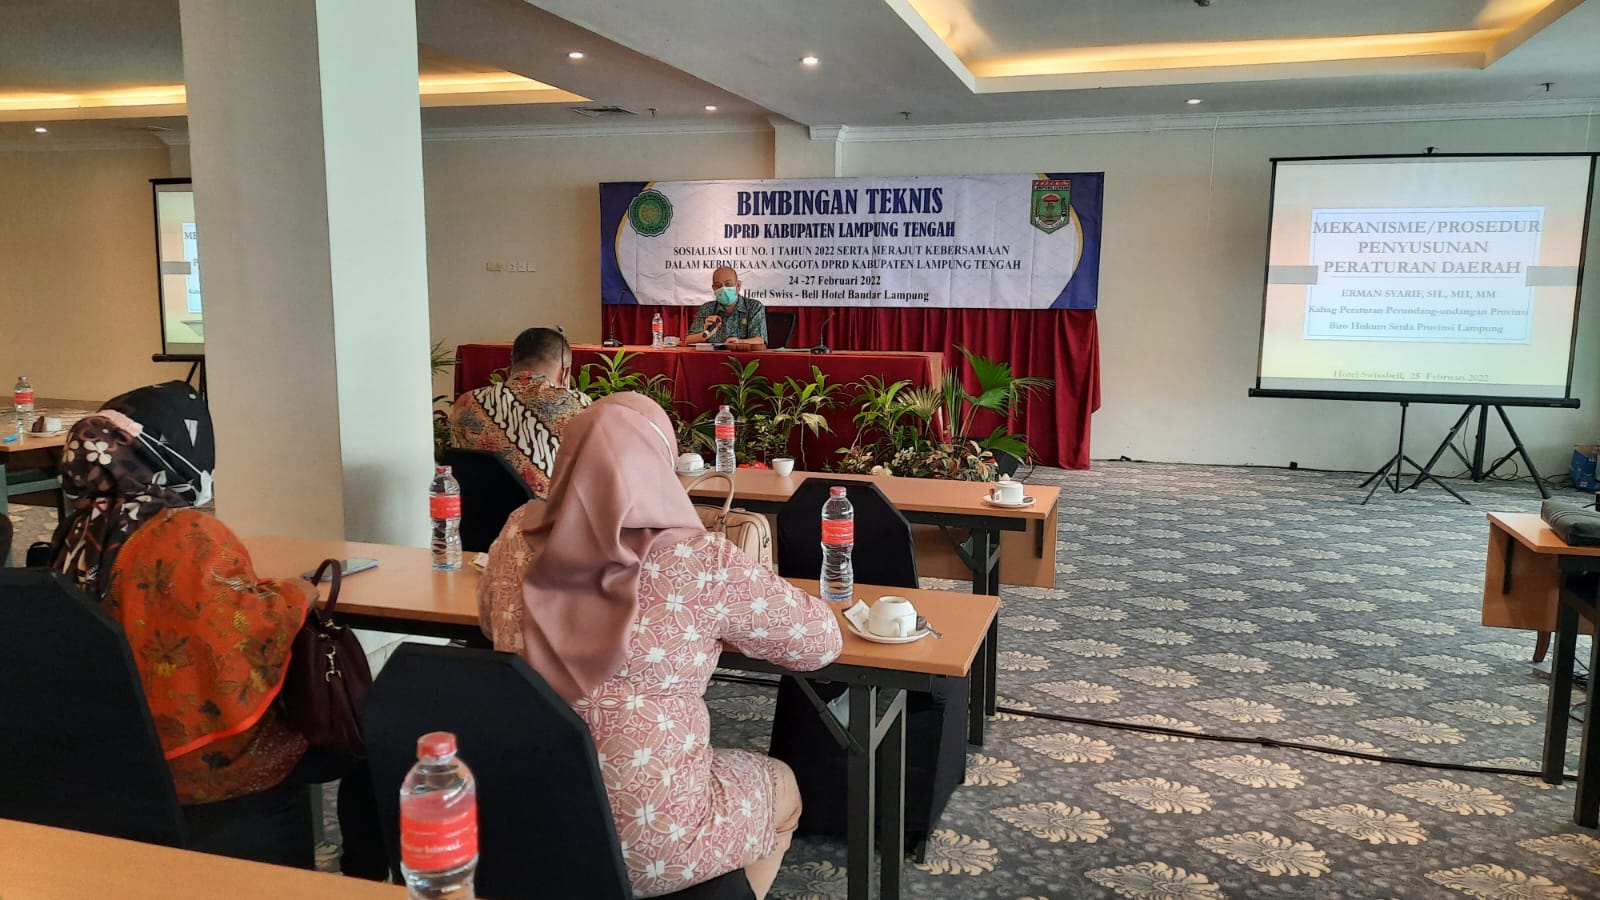 Bimbingan Teknis Penguatan Pimpinan DPRD dan Anggota DPRD Kabupaten se-Provinsi Lampung